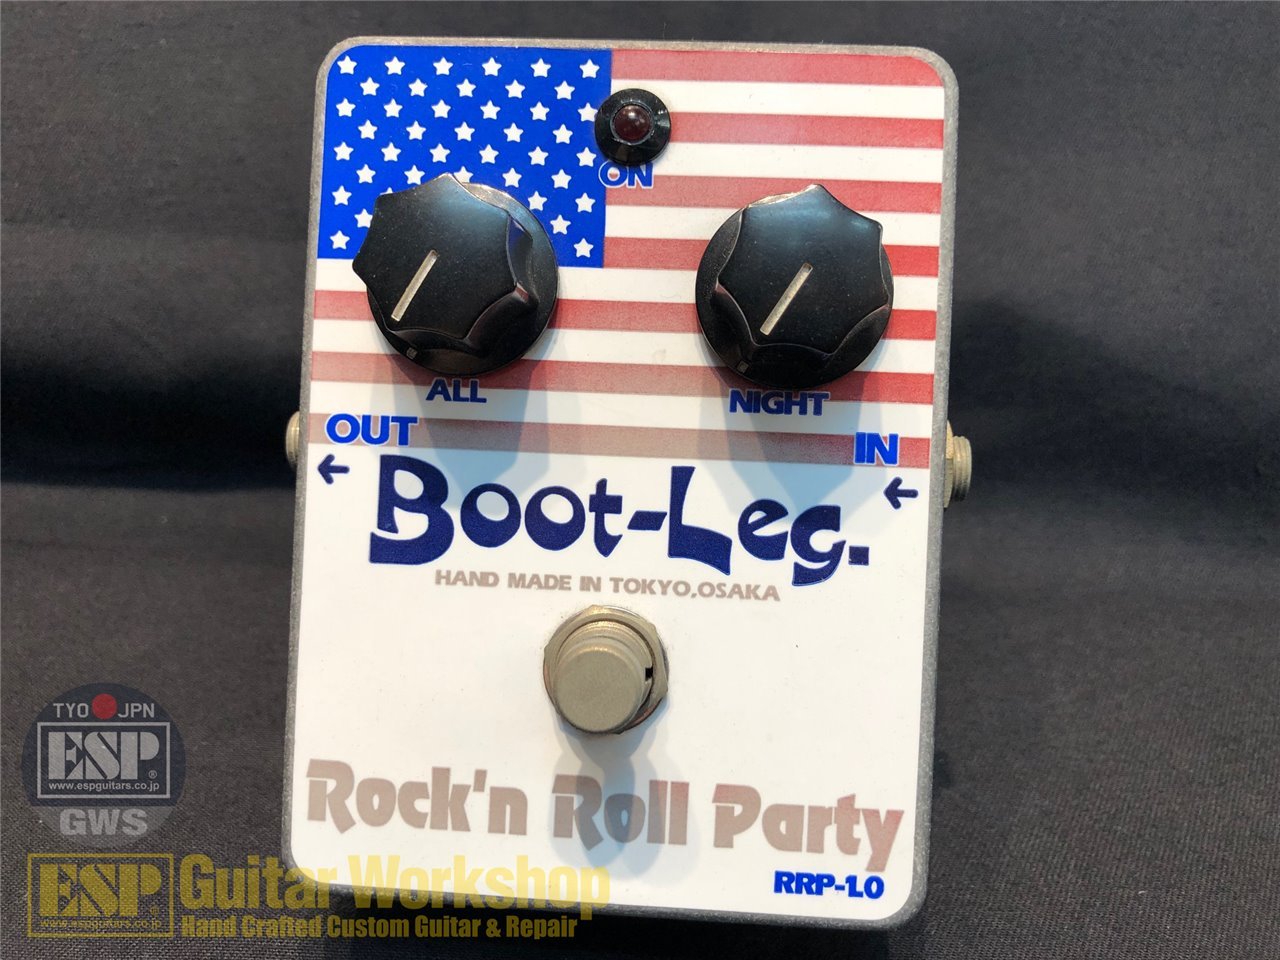 Boot-Leg RRP-1.0 Rockn Roll Party